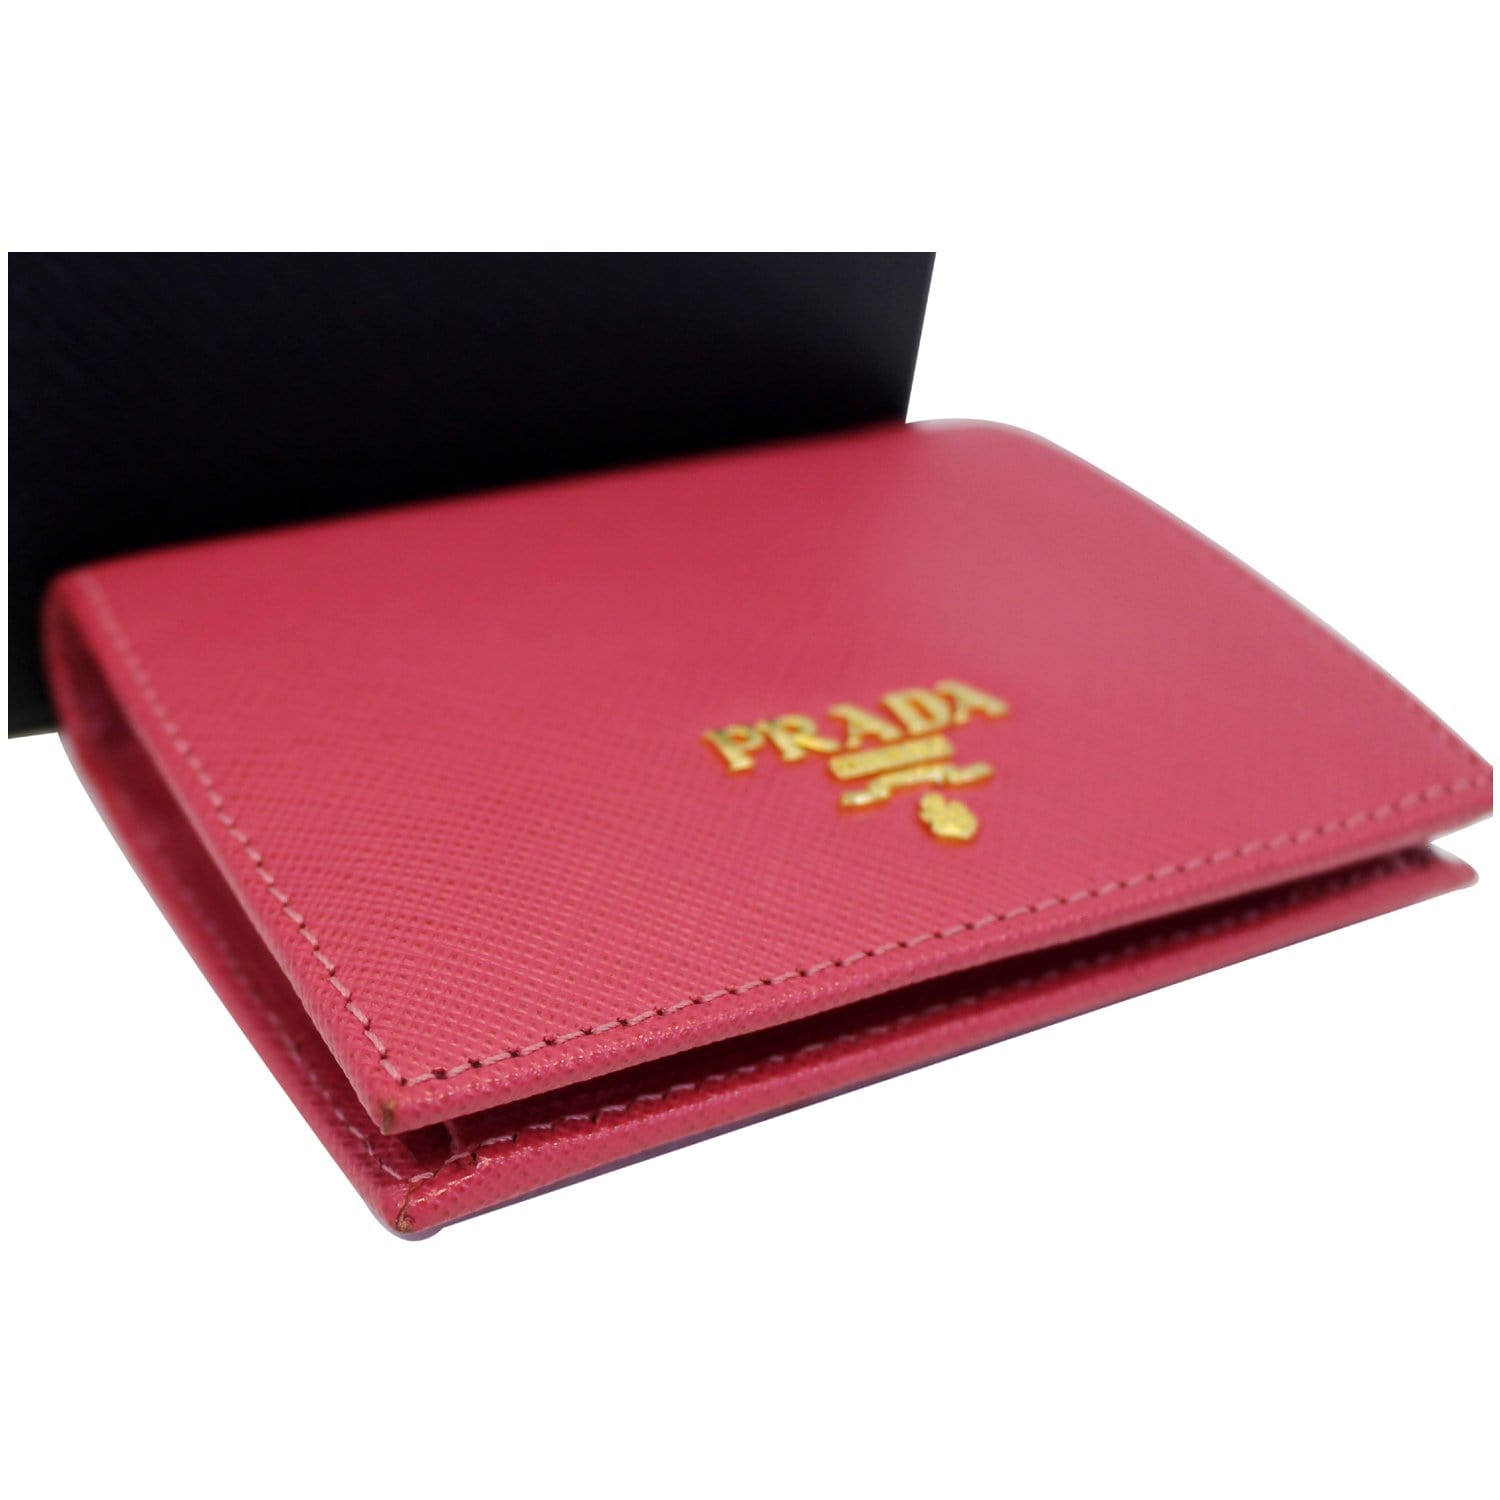 Prada Pink Saffiano Leather Trifold Wallet Prada